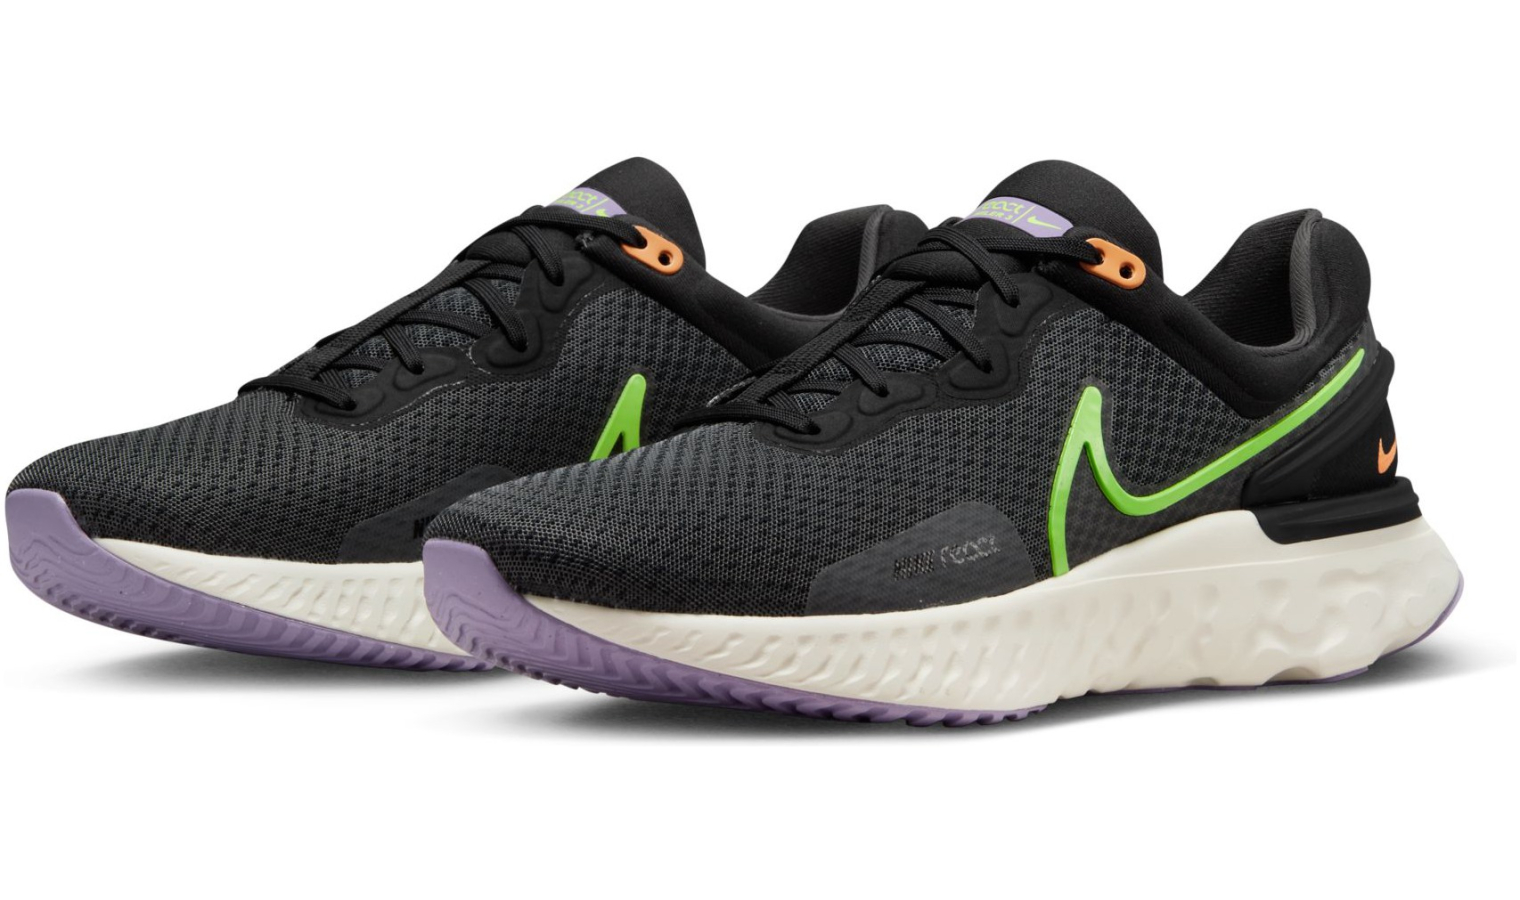 Mens running shoes Nike REACT MILER 3 black | AD Sport.store